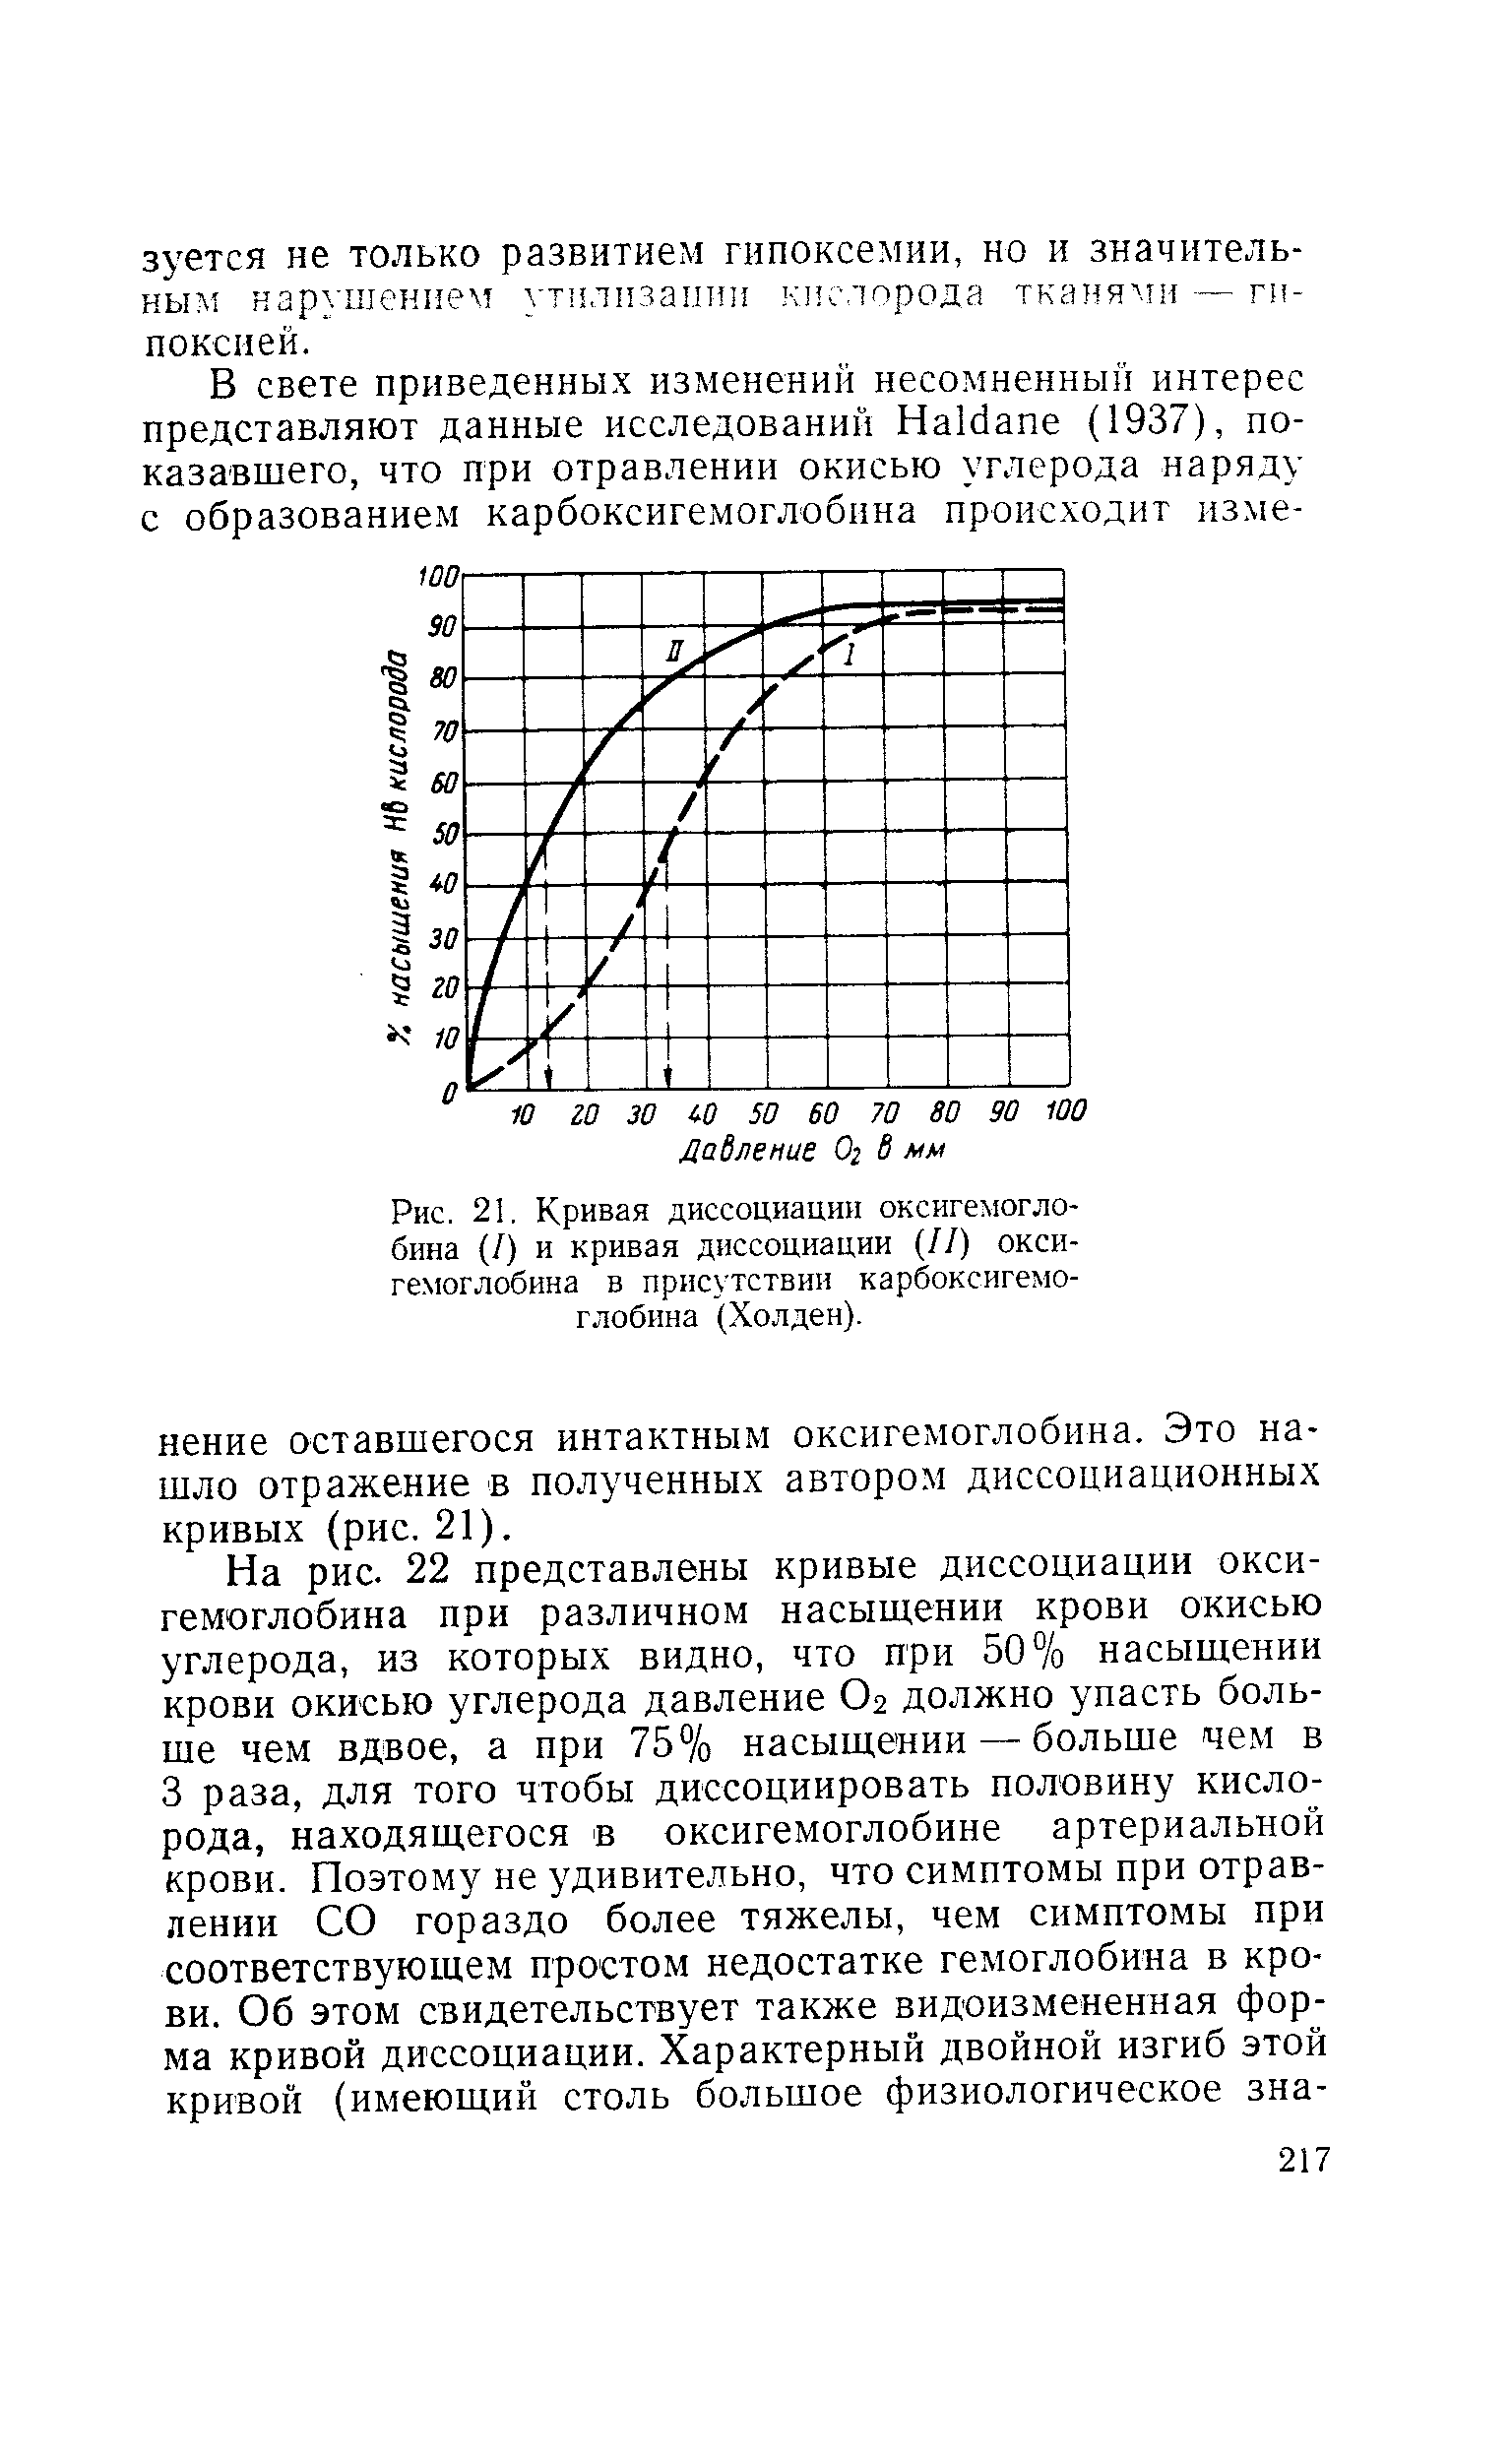 Рис. 21. Кривая диссоциации оксигемоглобина (/) и кривая диссоциации (//) оксигемоглобина в присутствии карбоксигемоглобина (Холден).